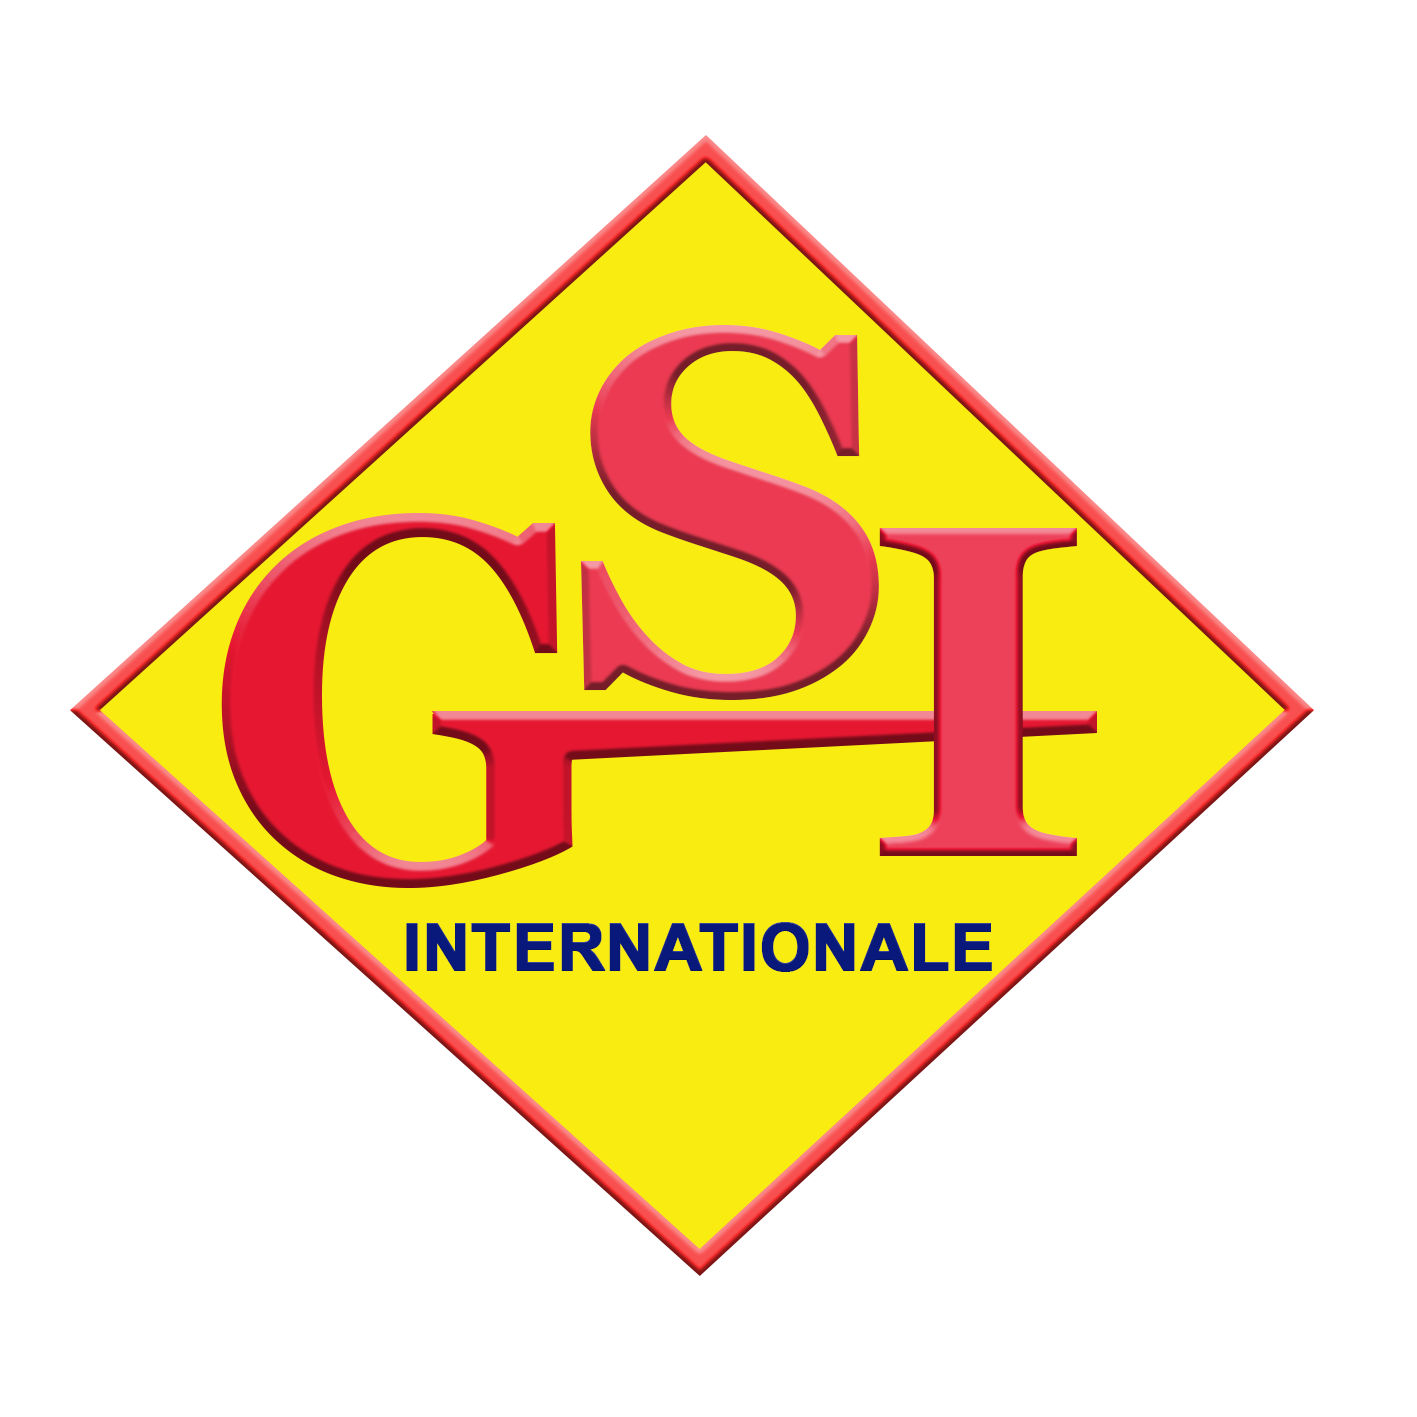 GSI INTERNATIONALE